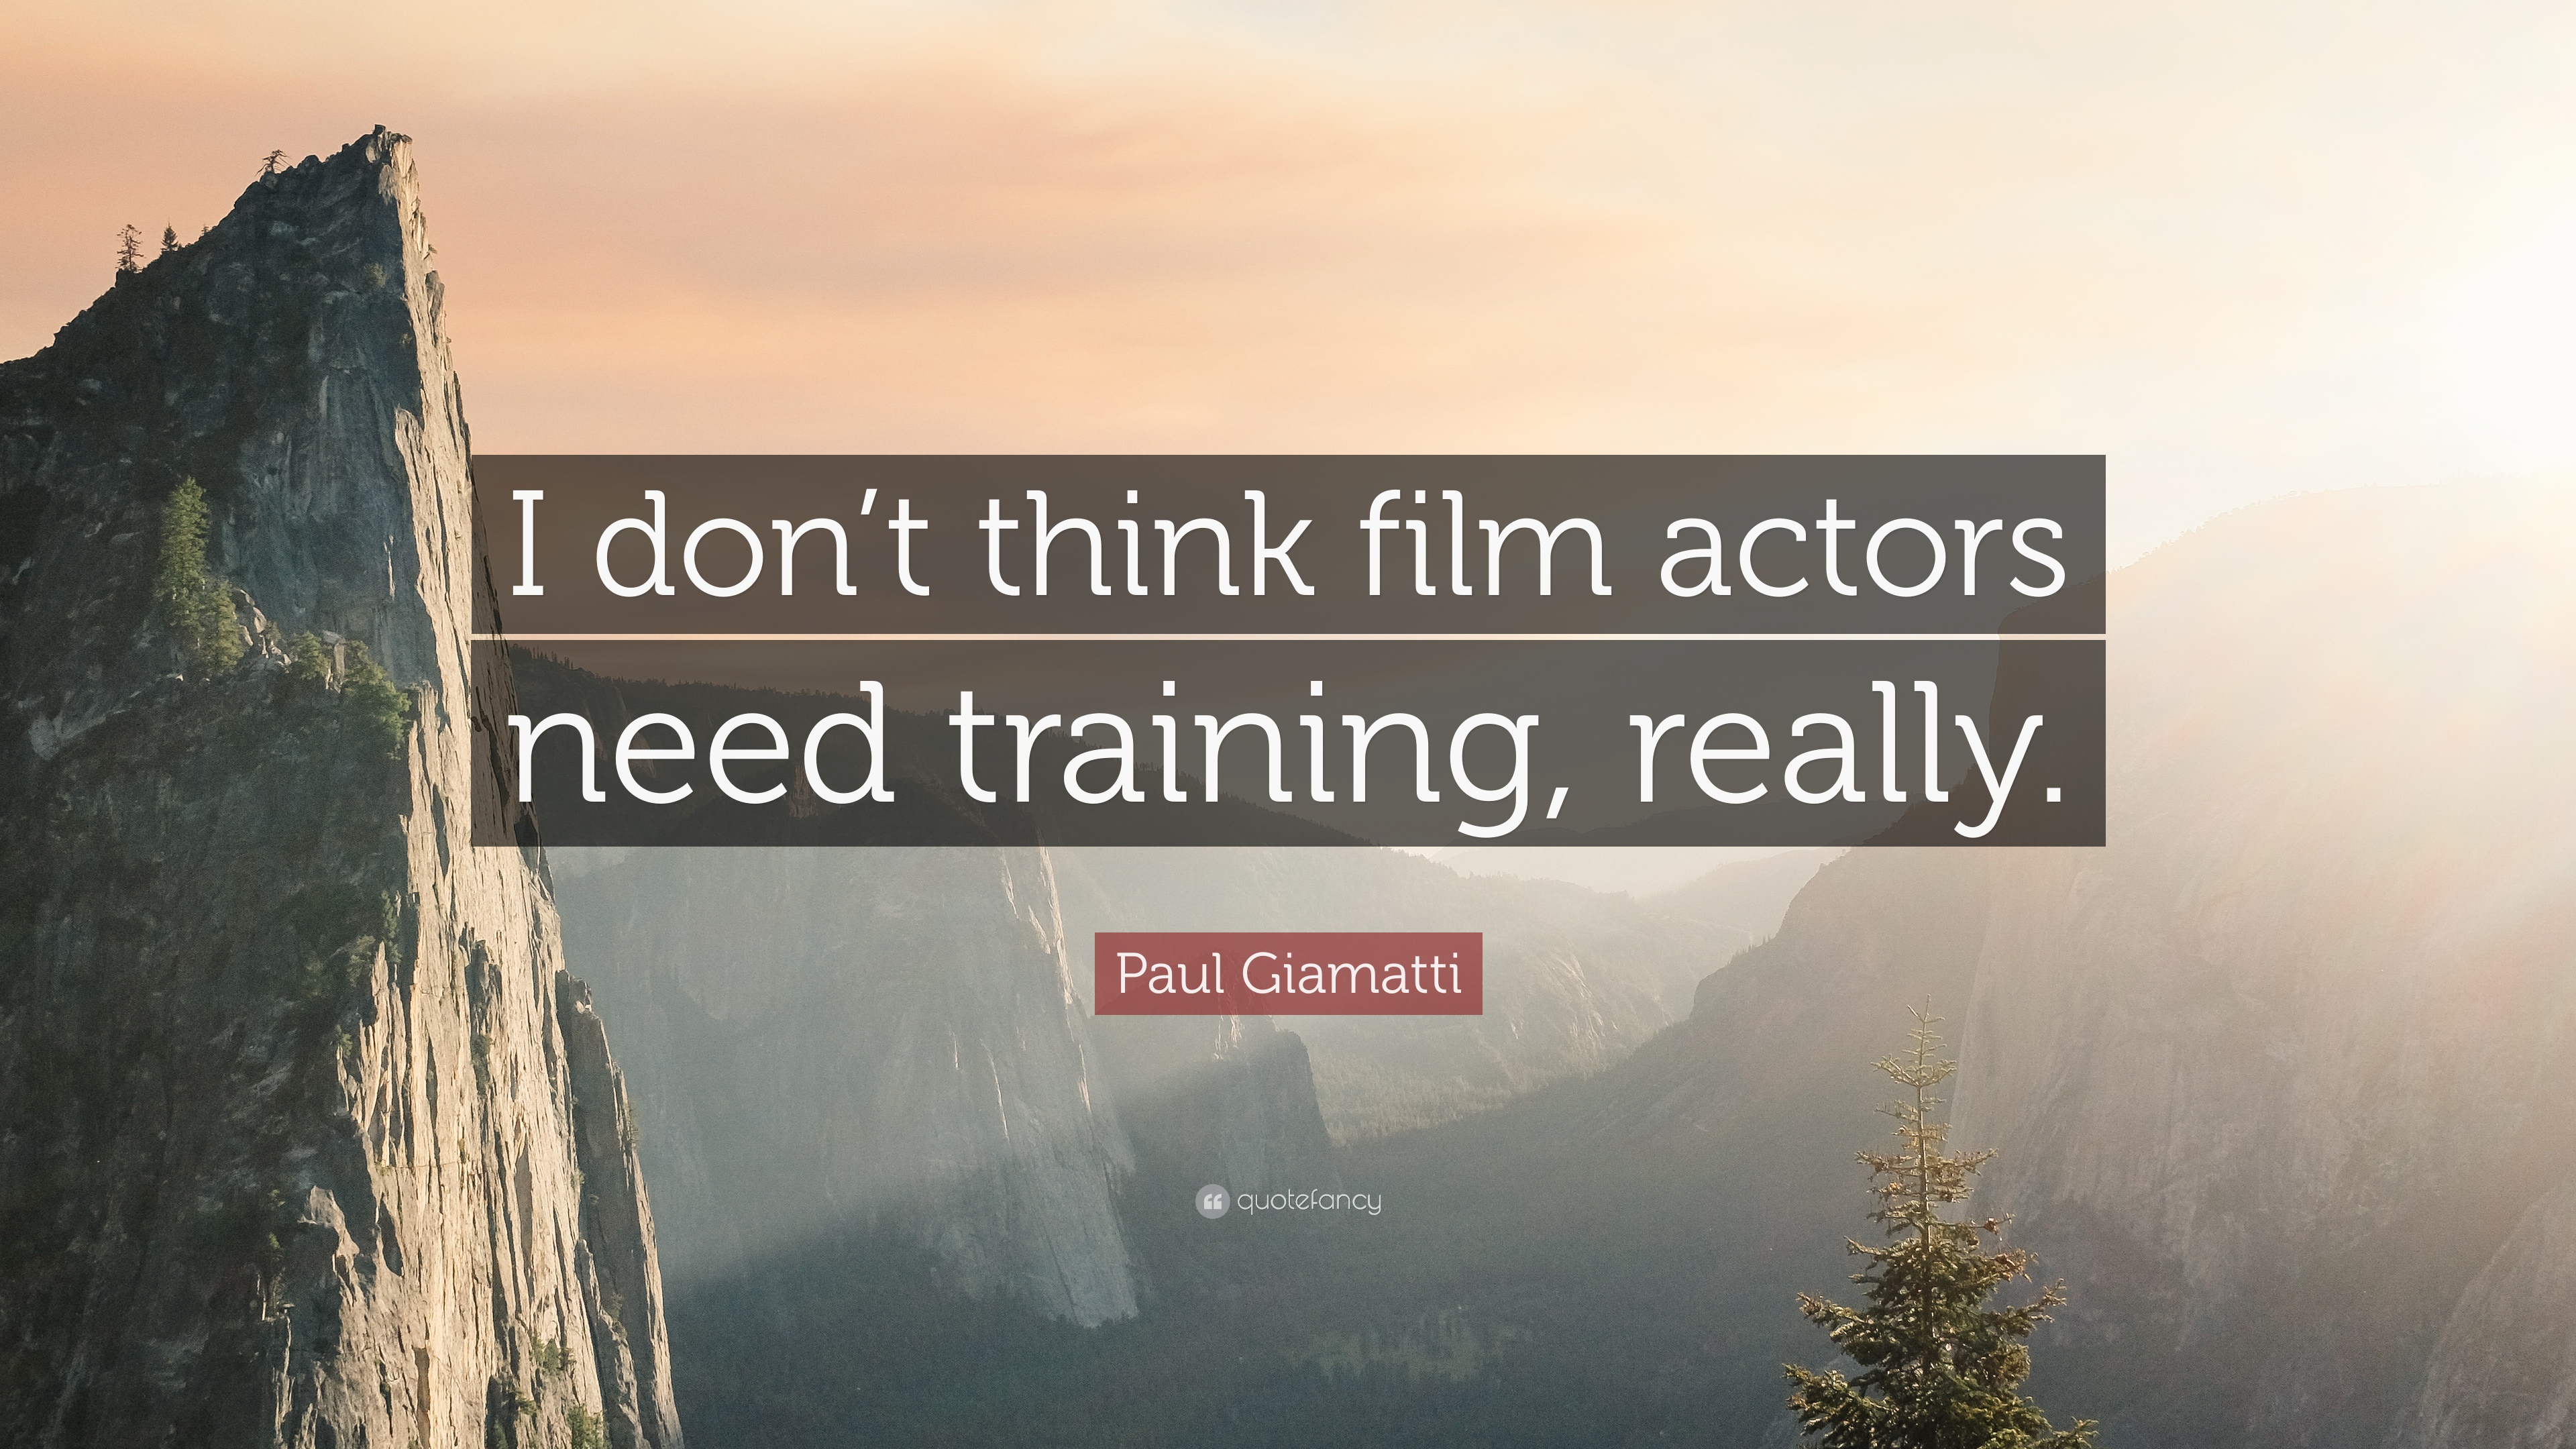 Paul Giamatti Quote: “I don't think film actors need training